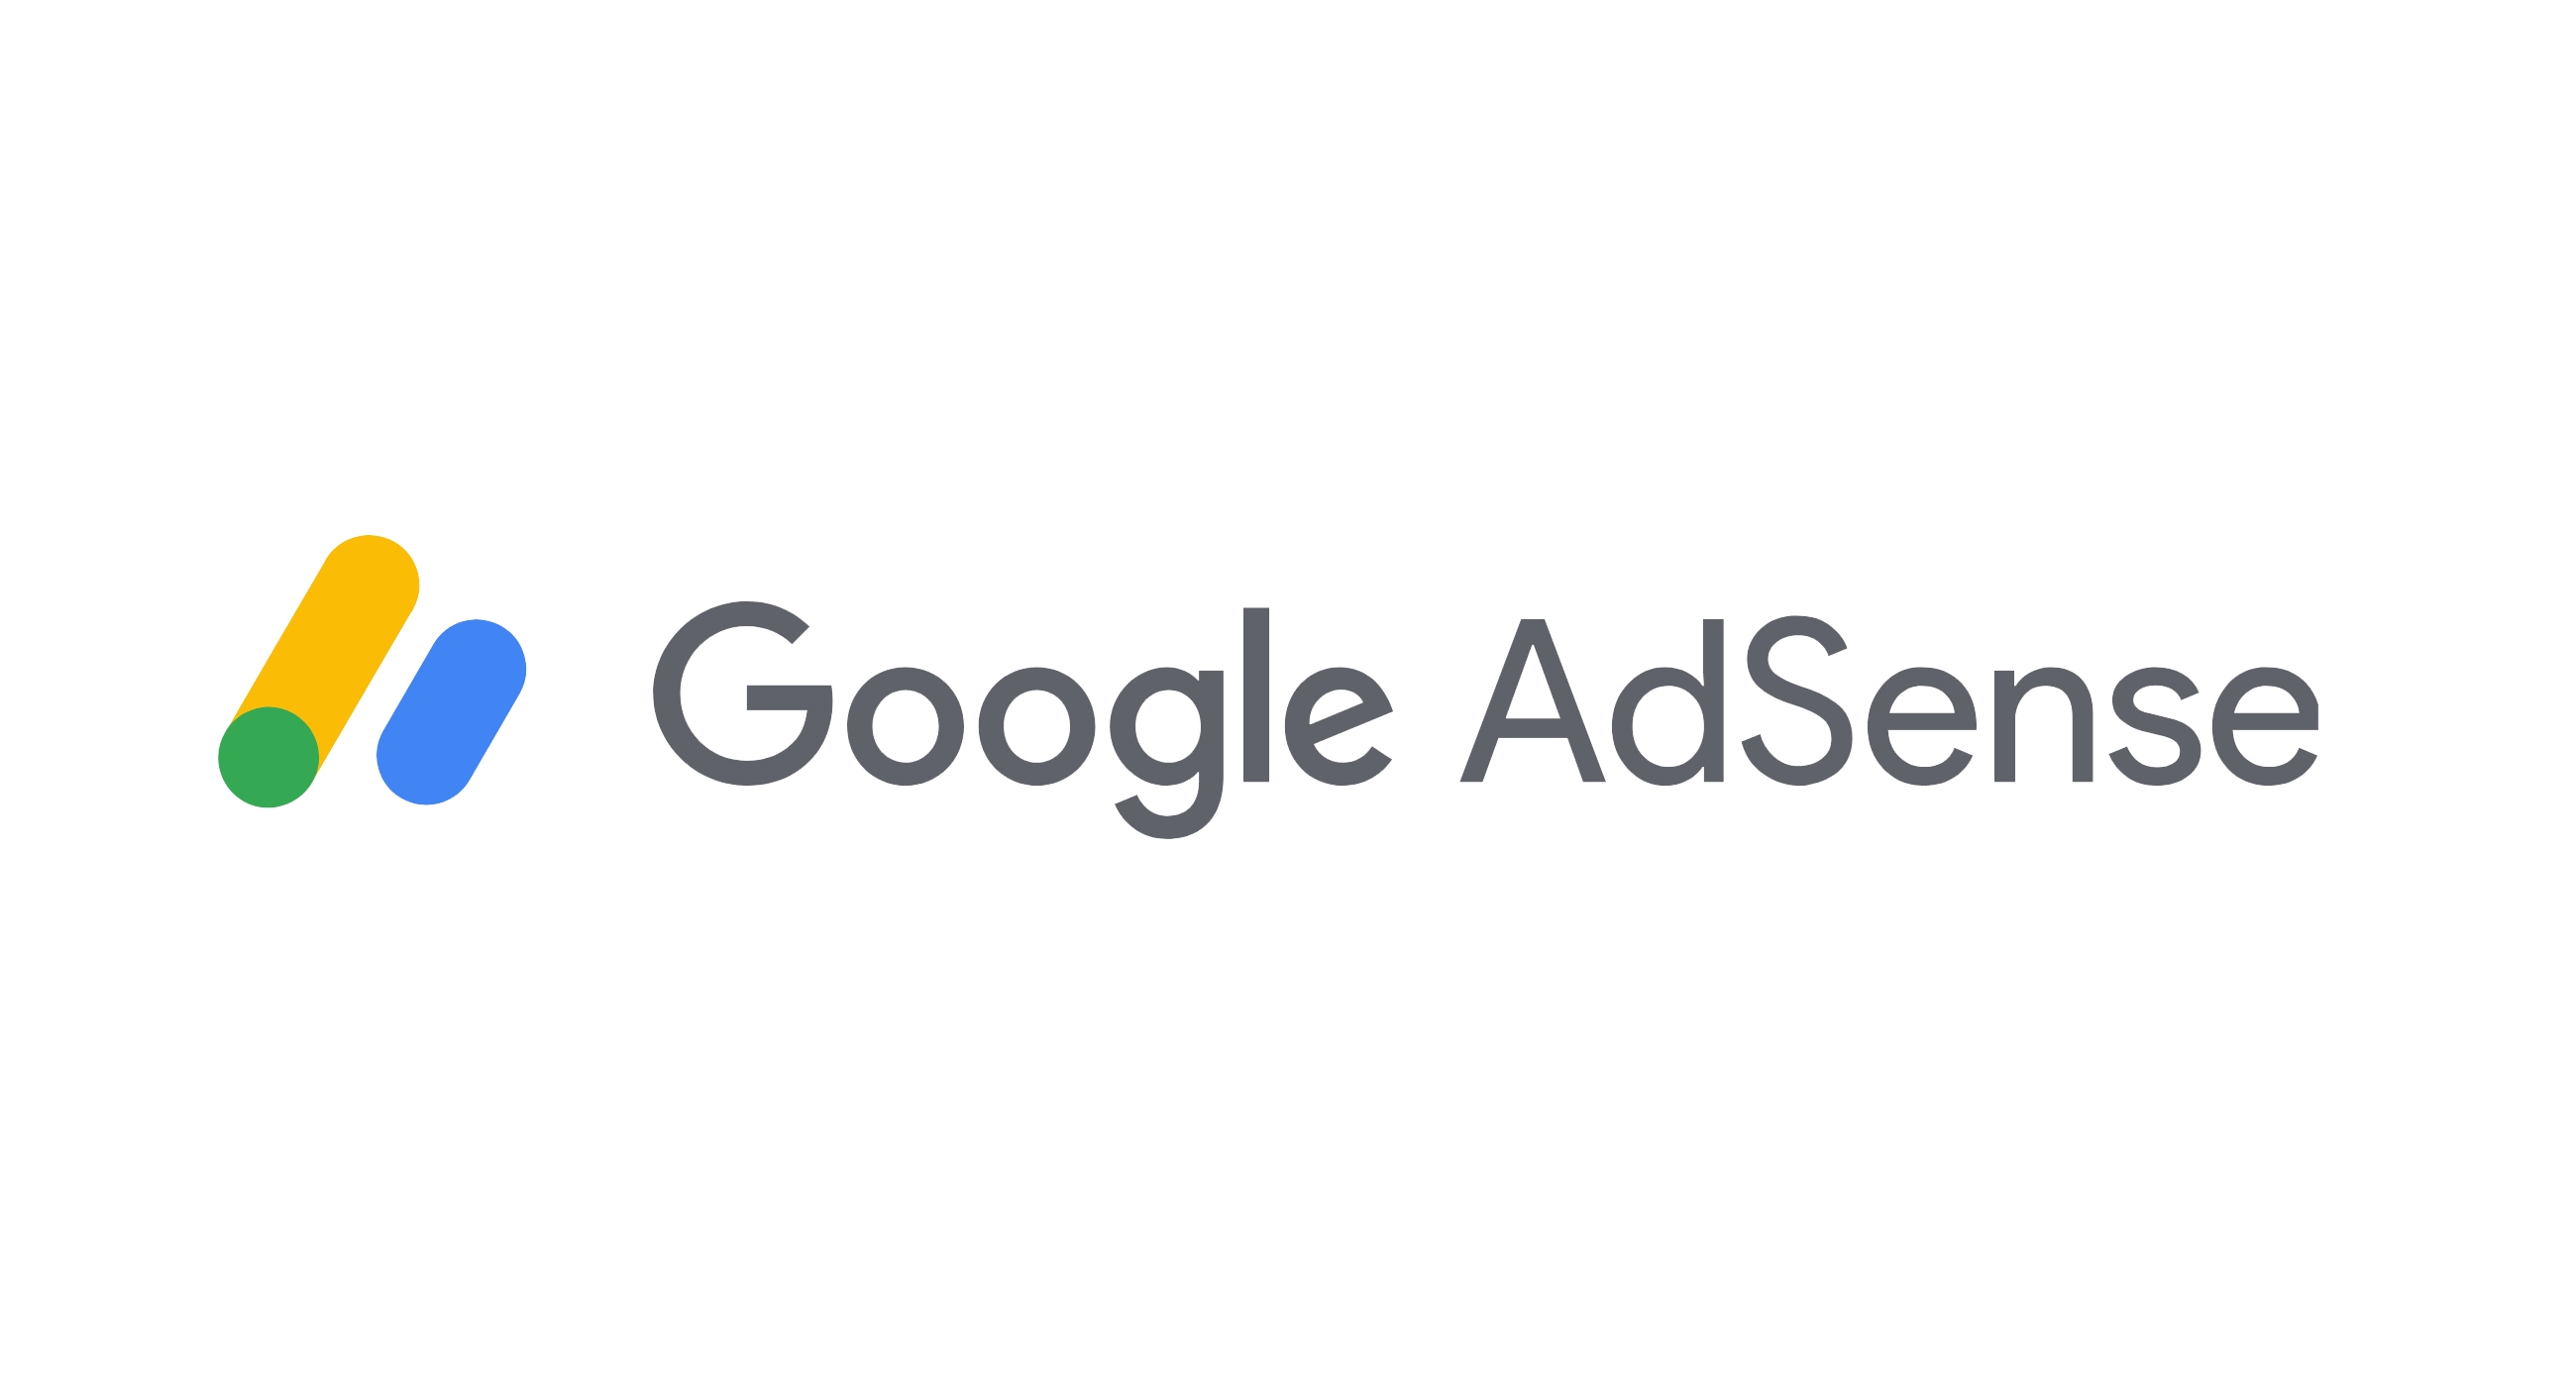 28 Best Google Adsense Optimized Wordpress Themes 2019 - 